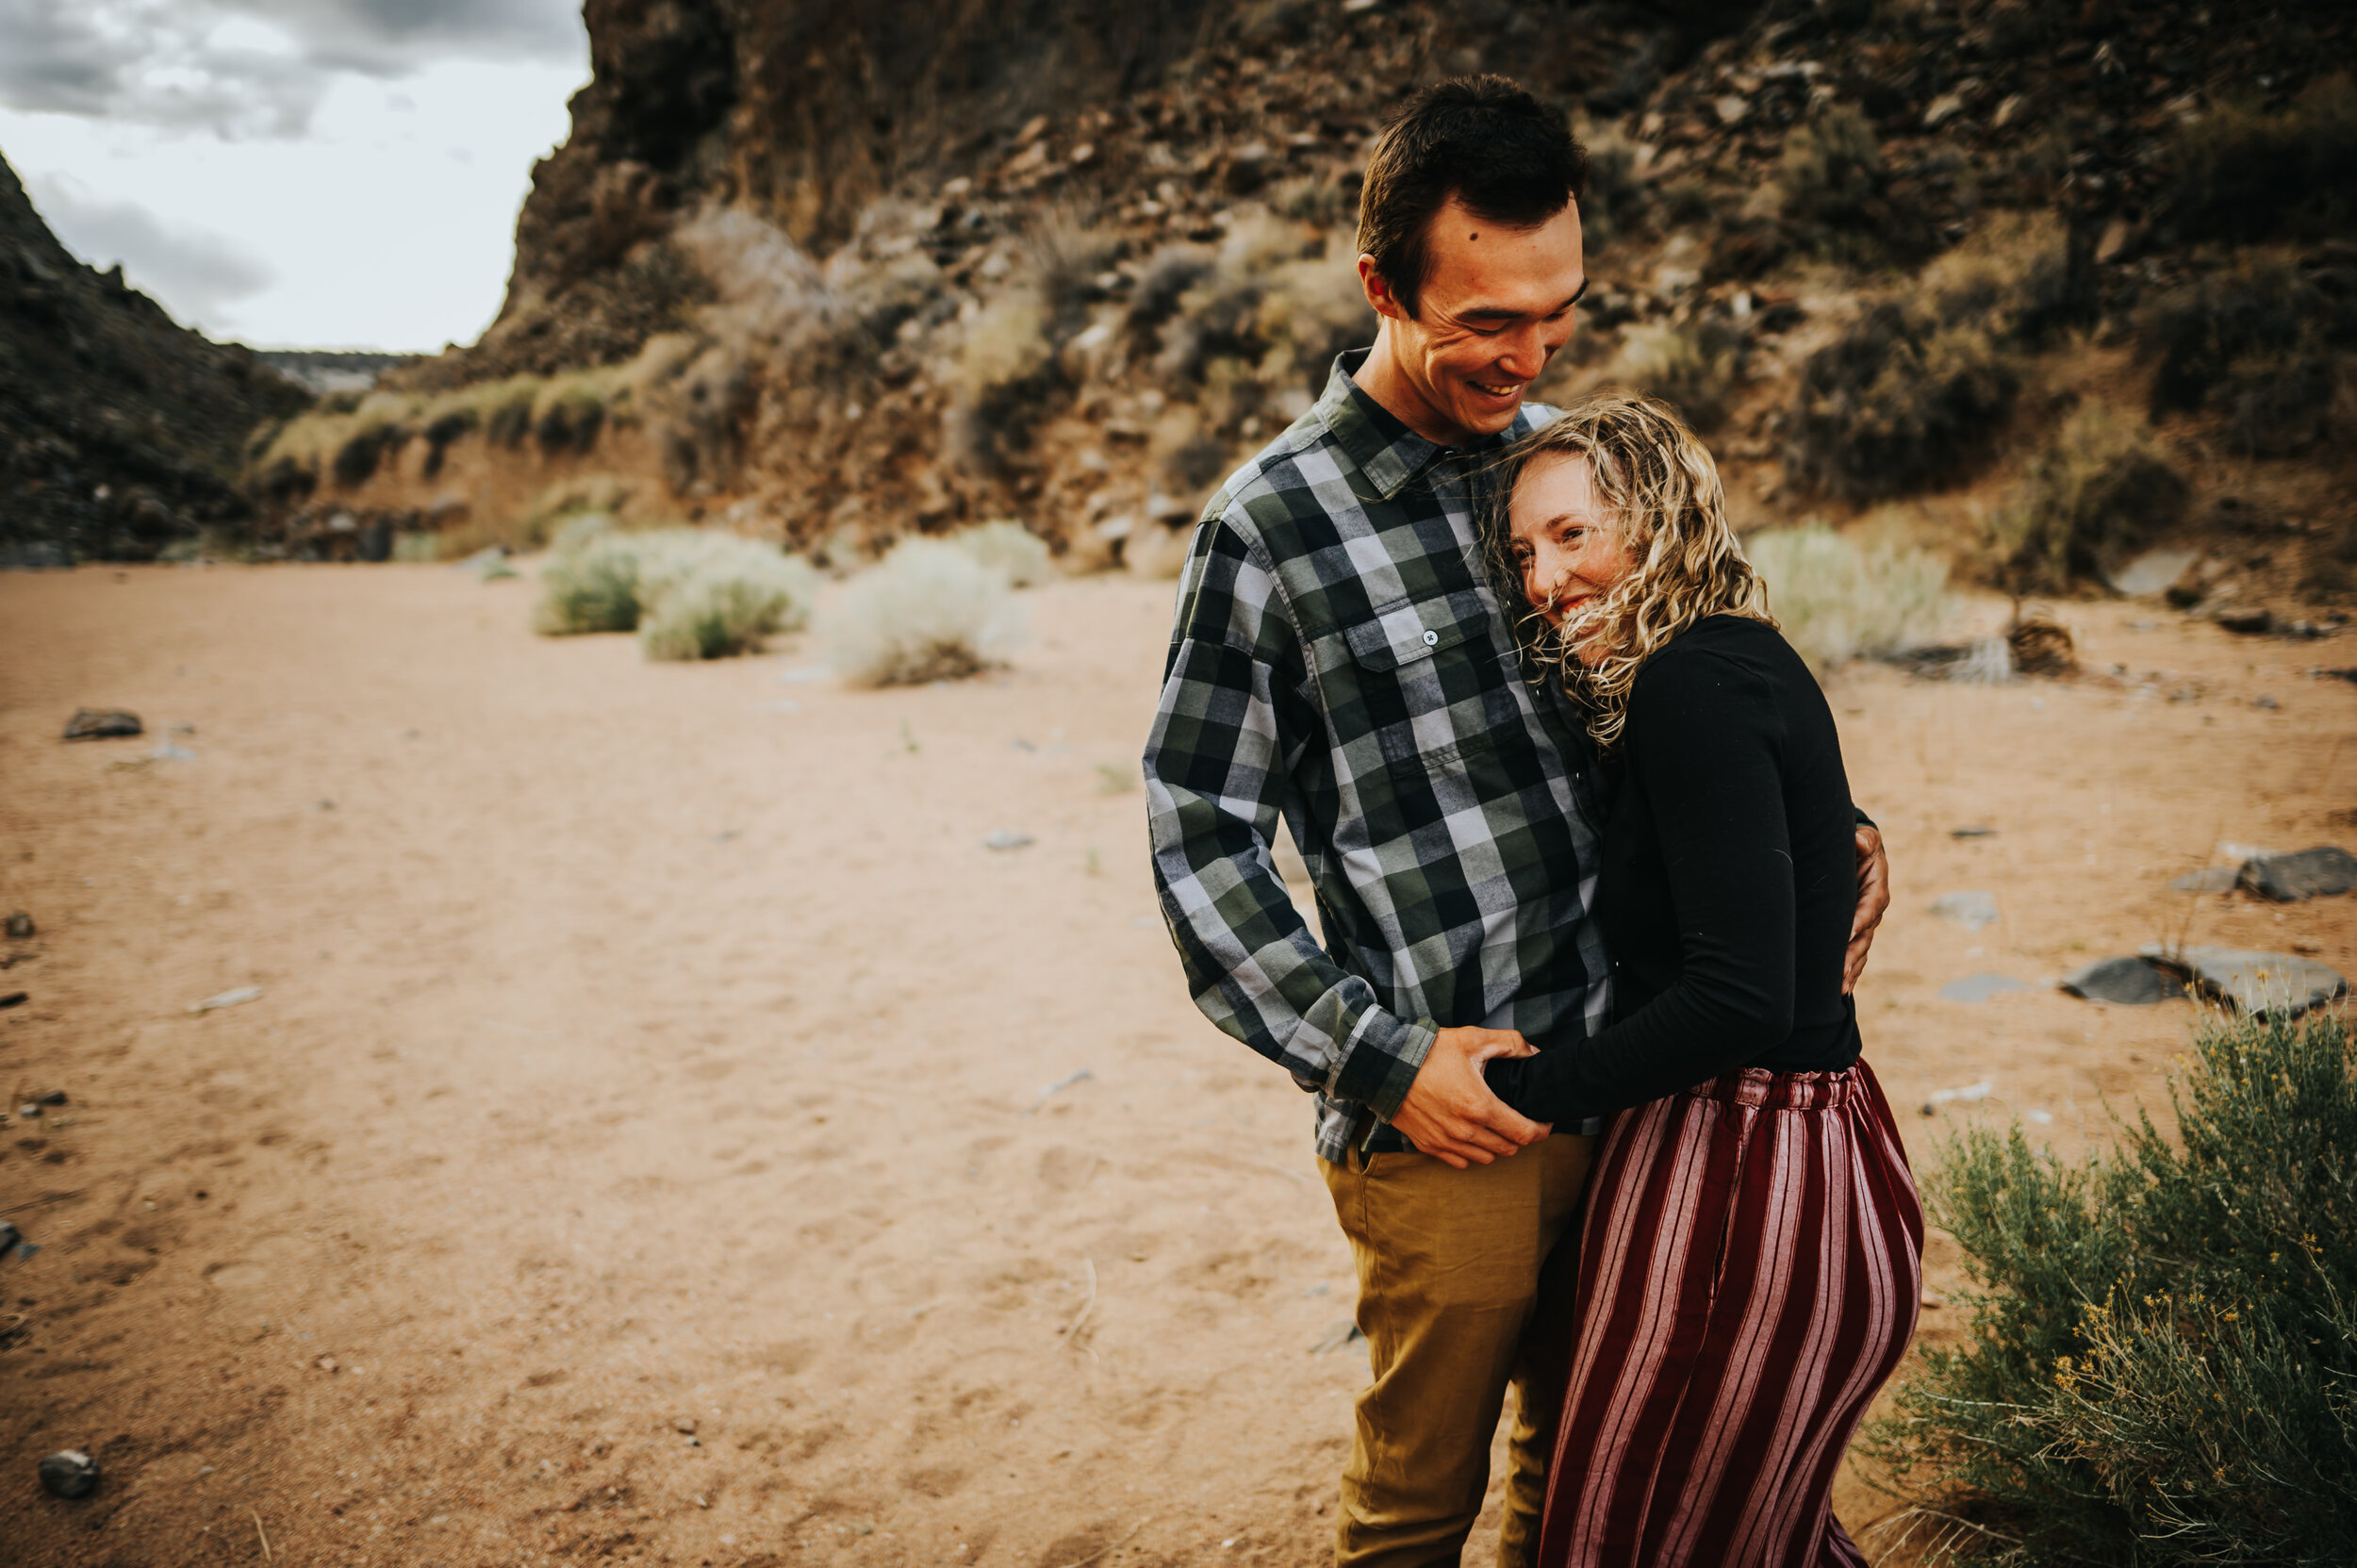 Hunter and Alex Couples Session Santa Fe New Mexico Sunset Diablo Canyon Wild Prairie Photography-4-2020.jpg